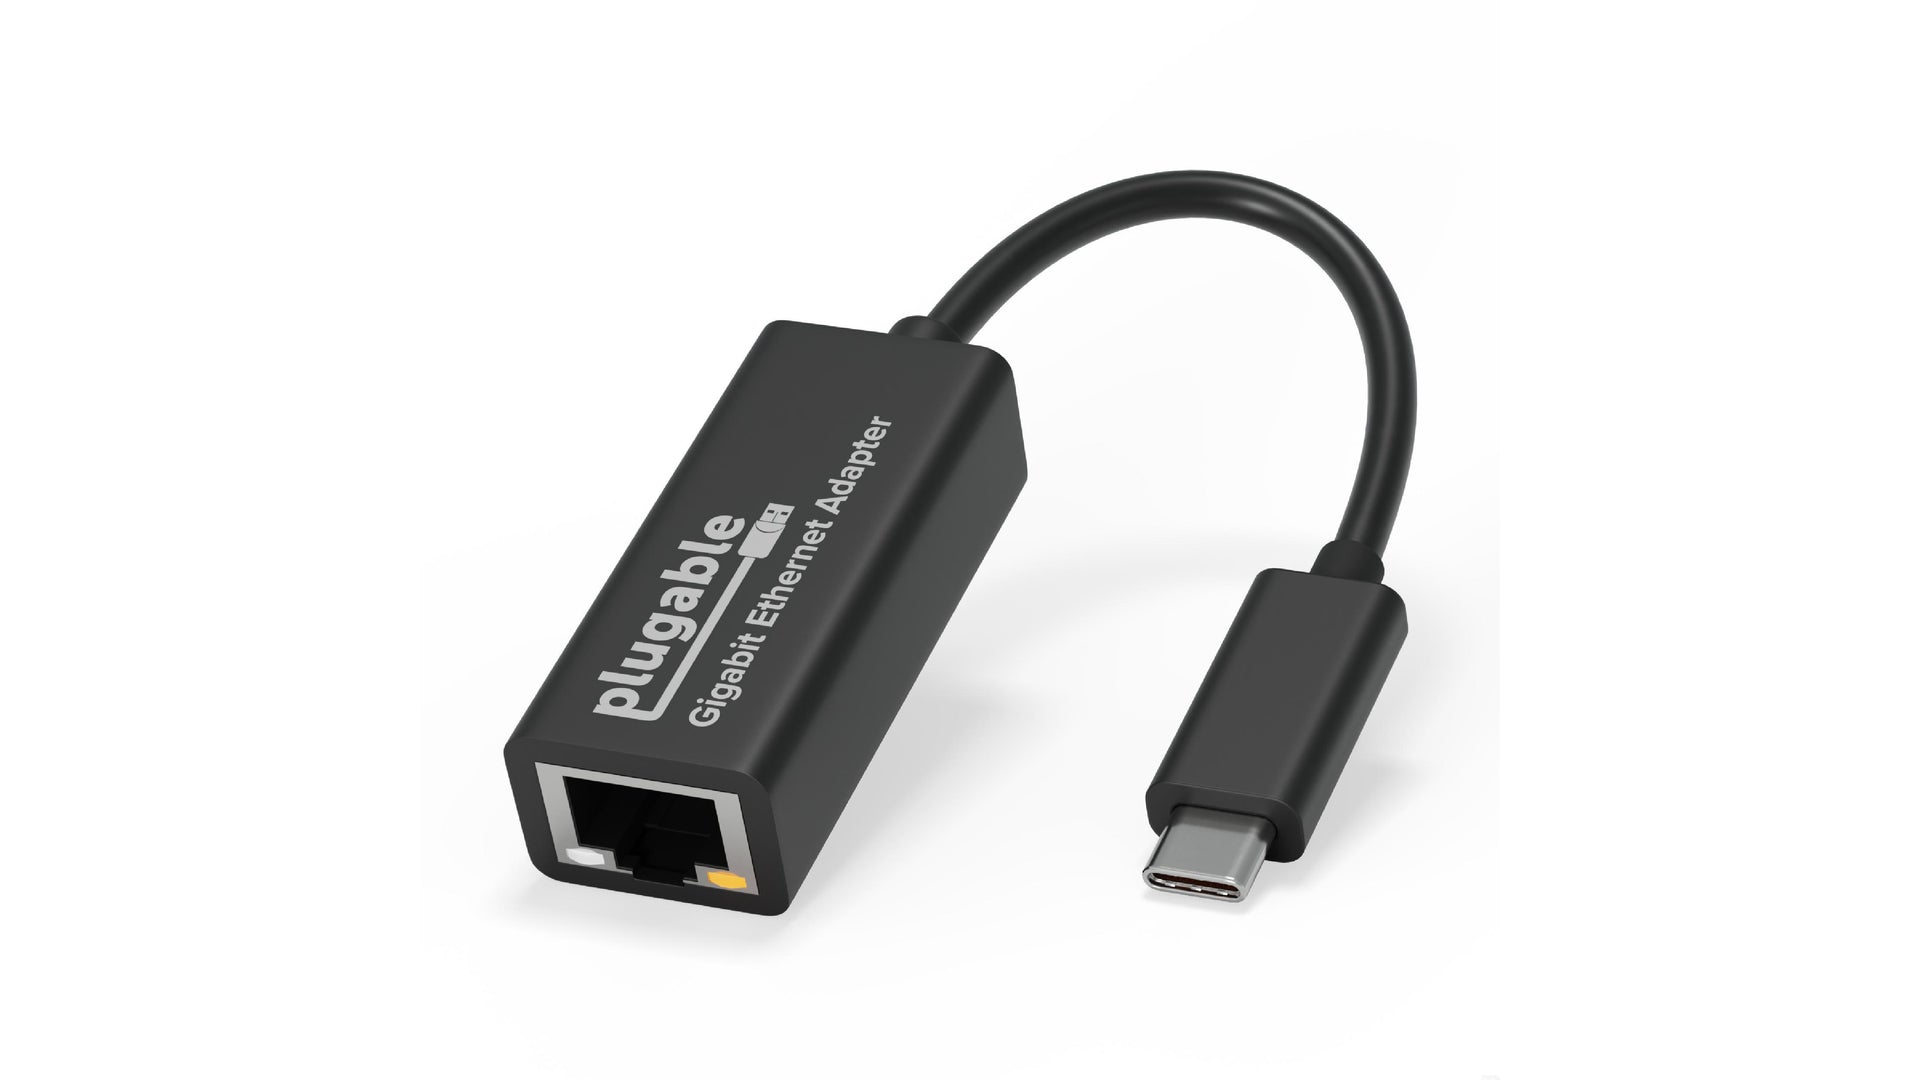 USB-C to USB Adapter - M/F - USB 3.0 - USB-C Cables